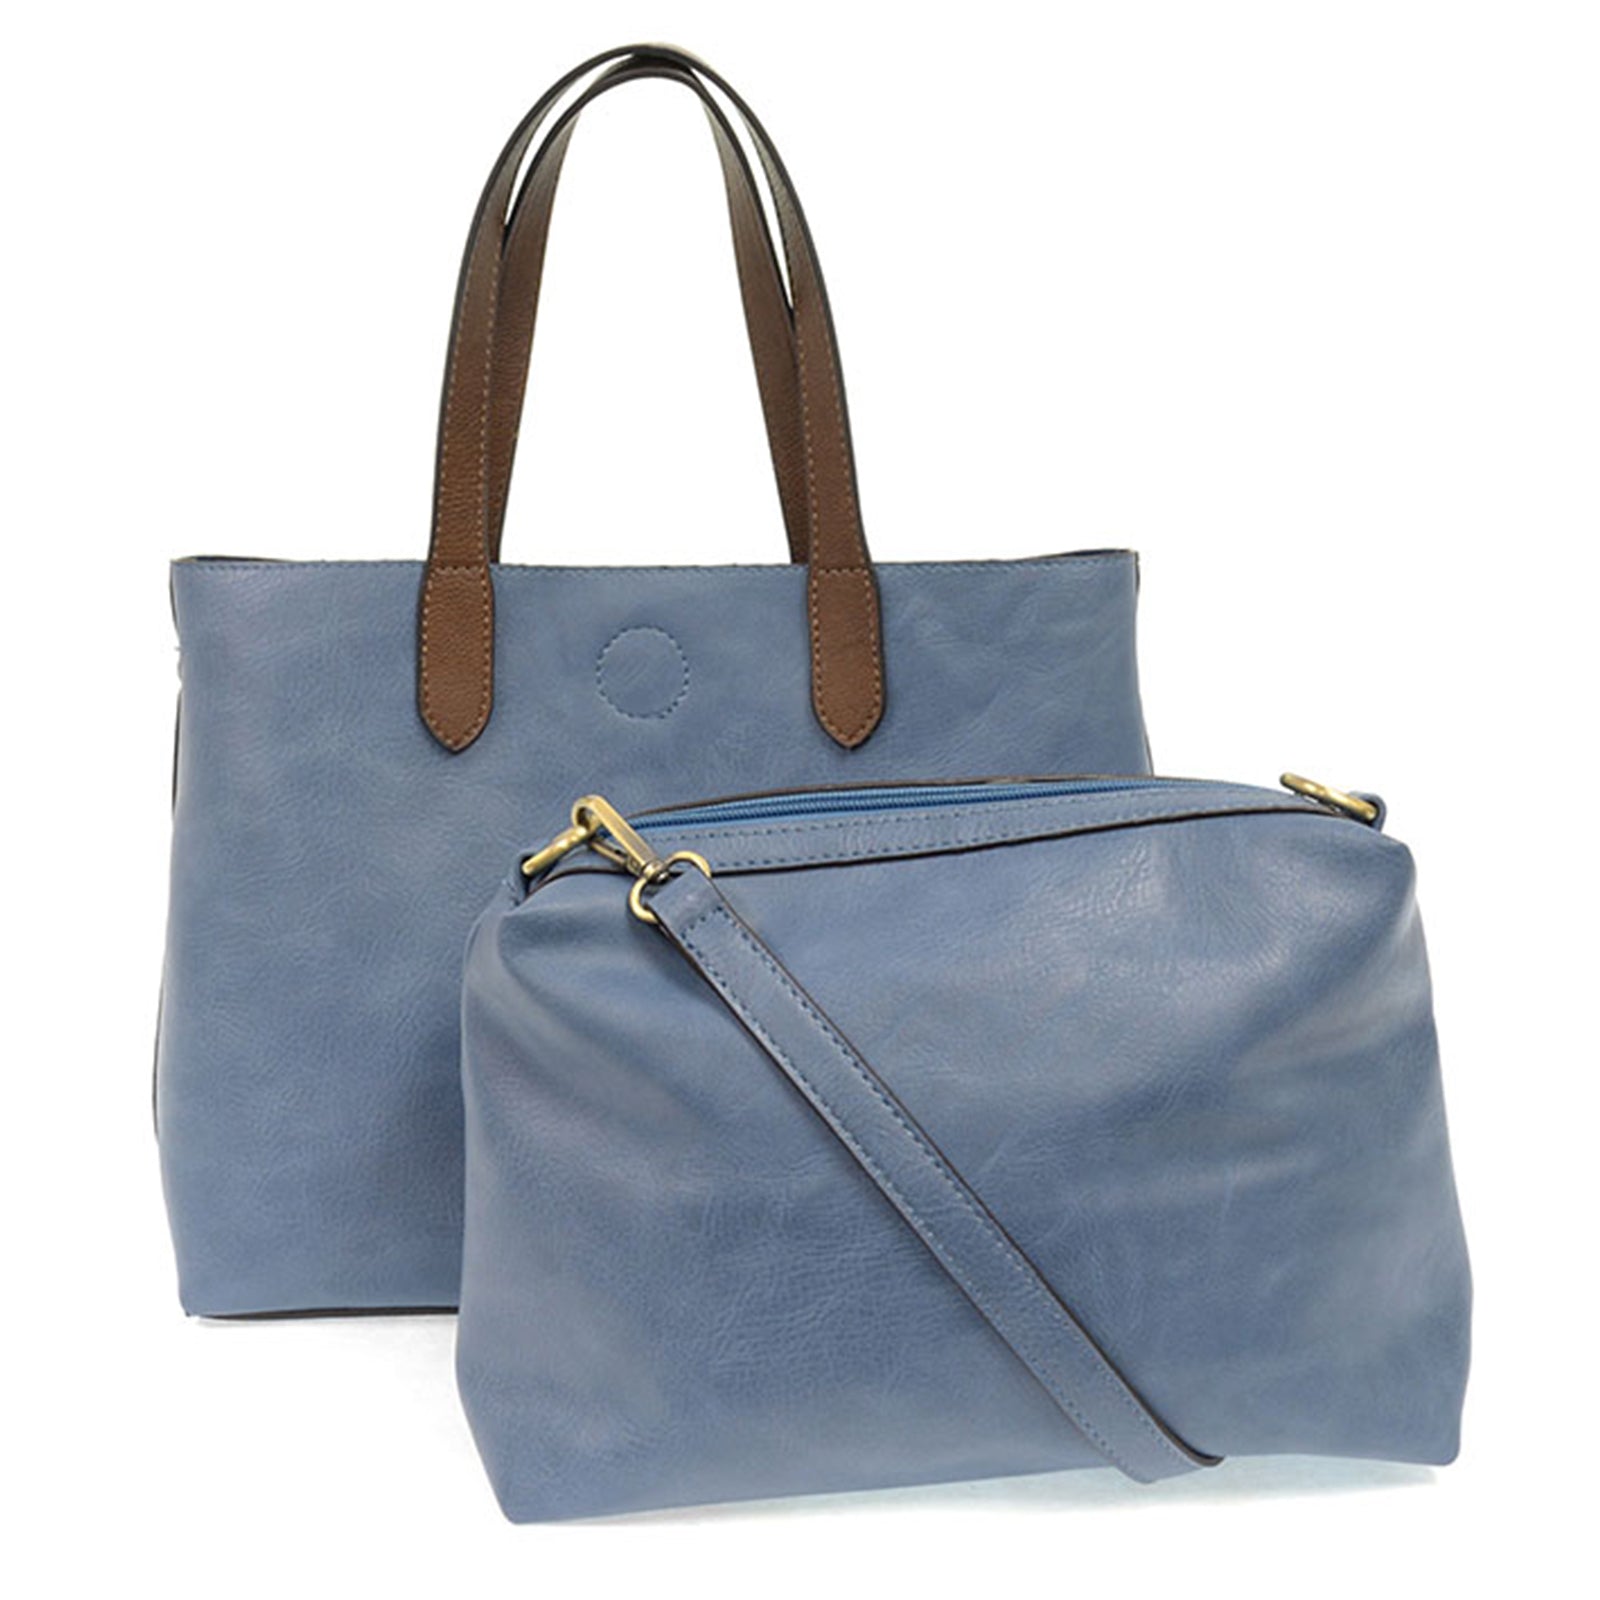 Joy Accessories Mariah handbag cerulean blue with insert bag